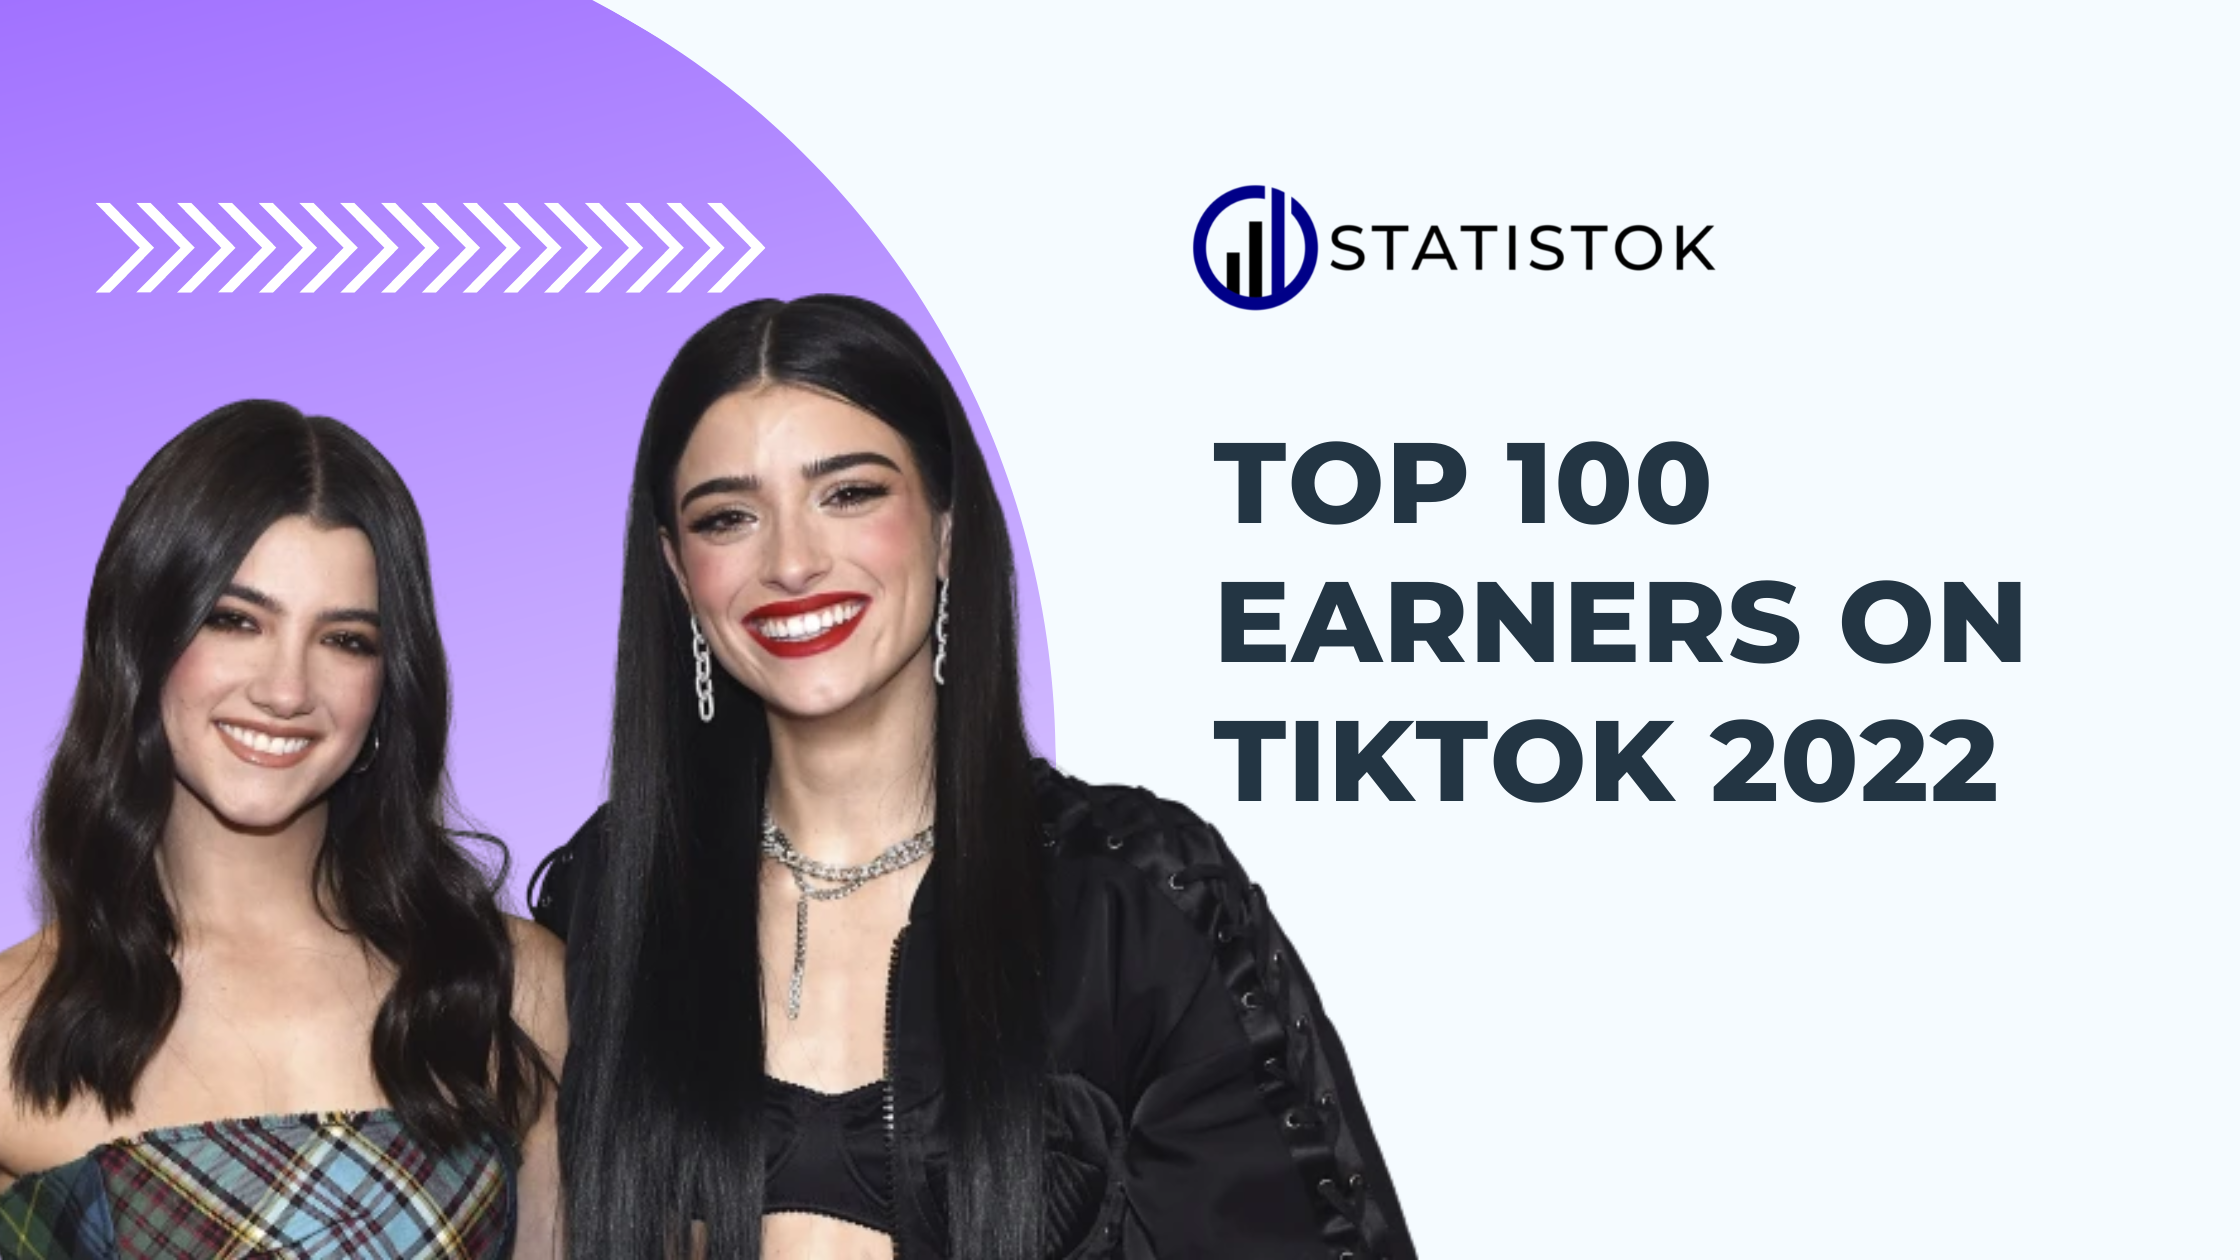 Top 100 Earners on TikTok 2022